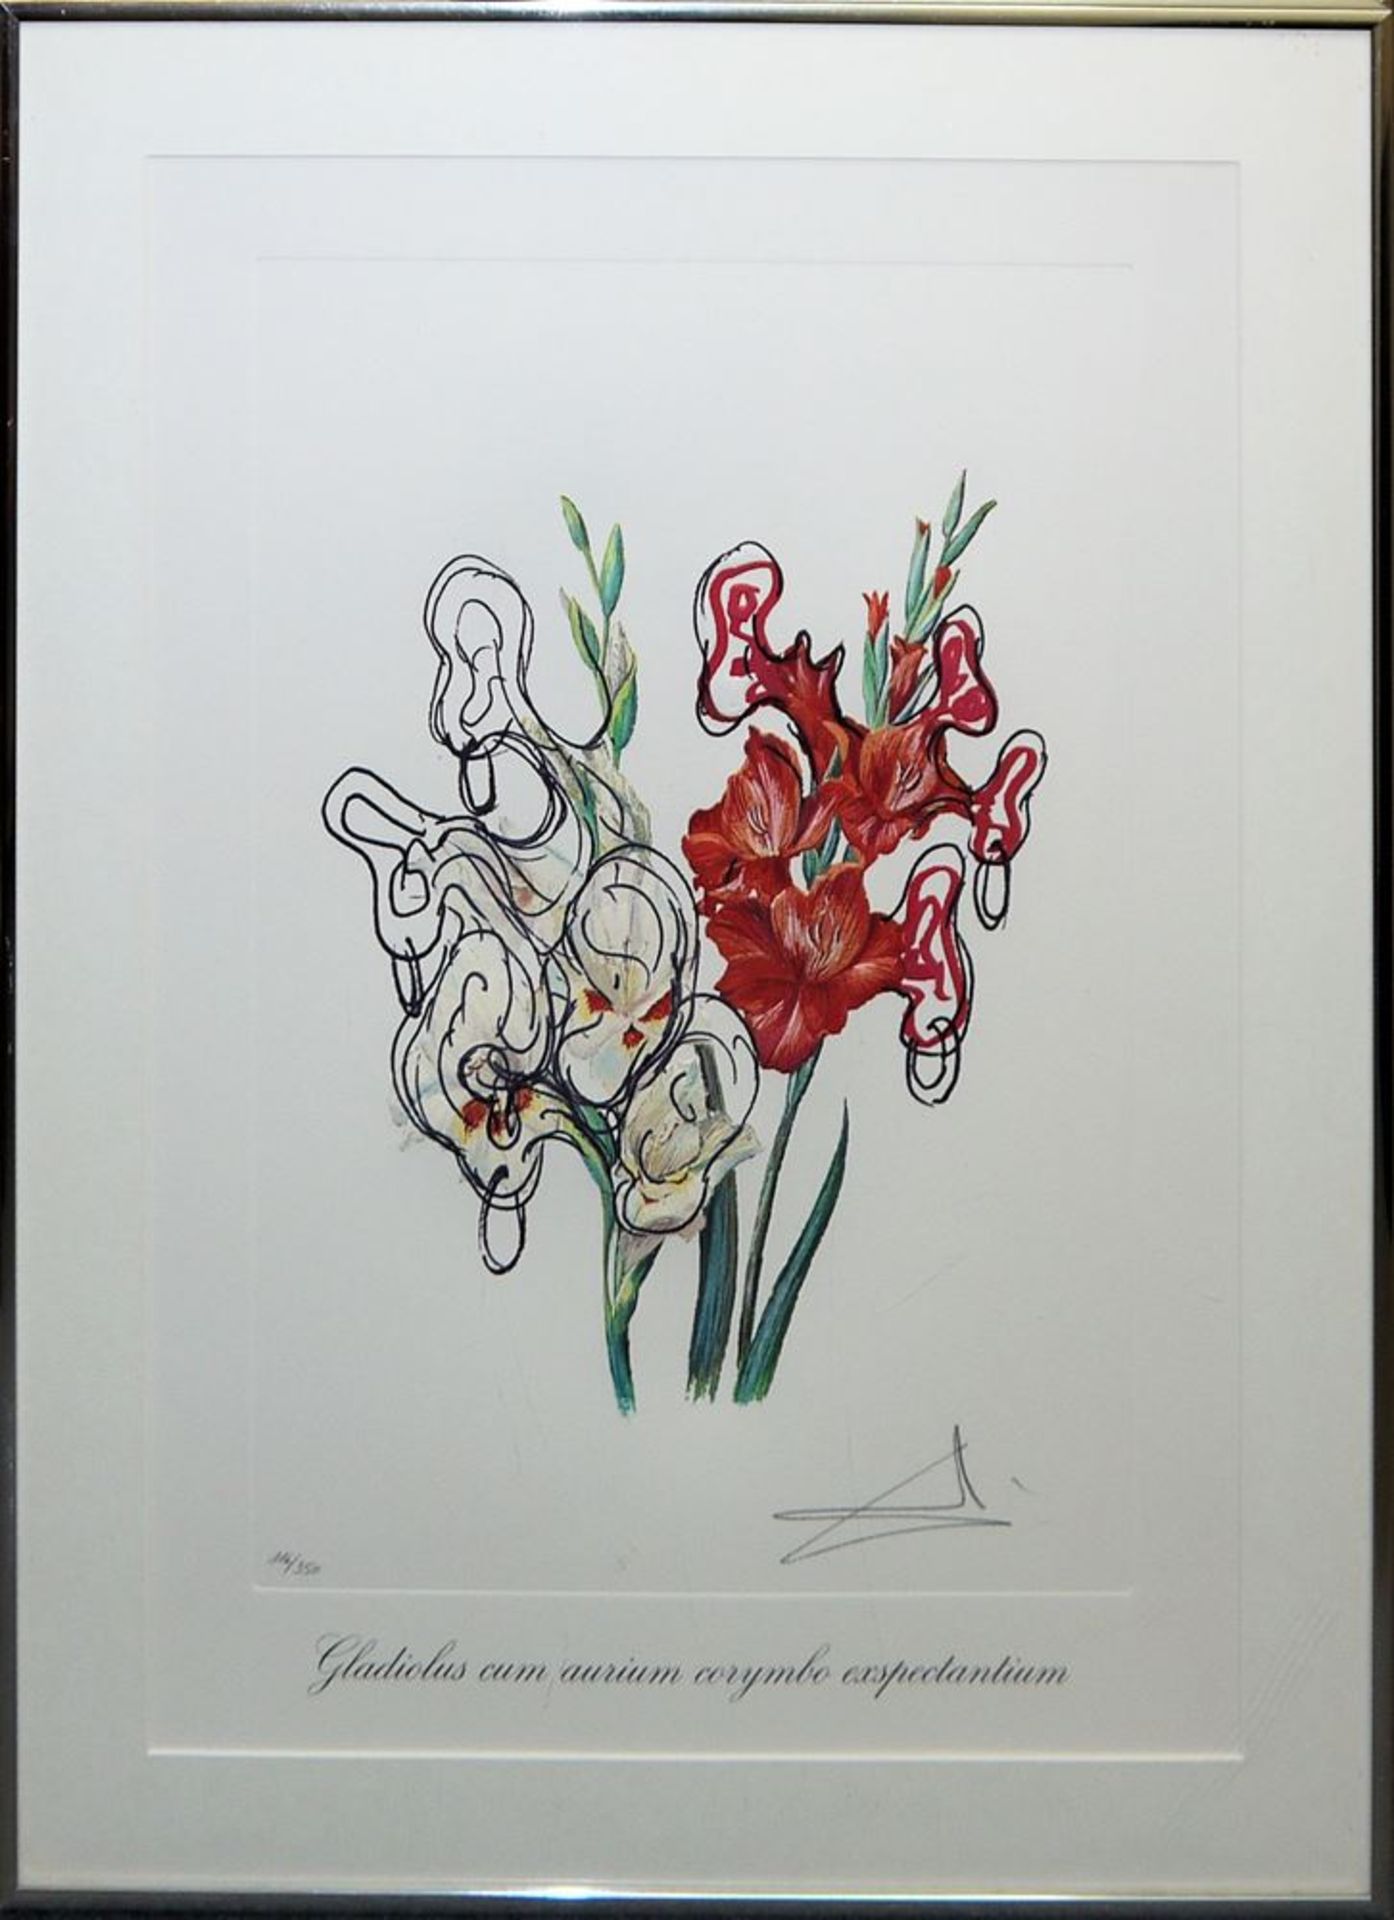 Salvador Dali, "Surrealistic Flowers", 1972, 5 Heliogravuren mit Reliefprägung (Carborundum), alle - Bild 6 aus 6